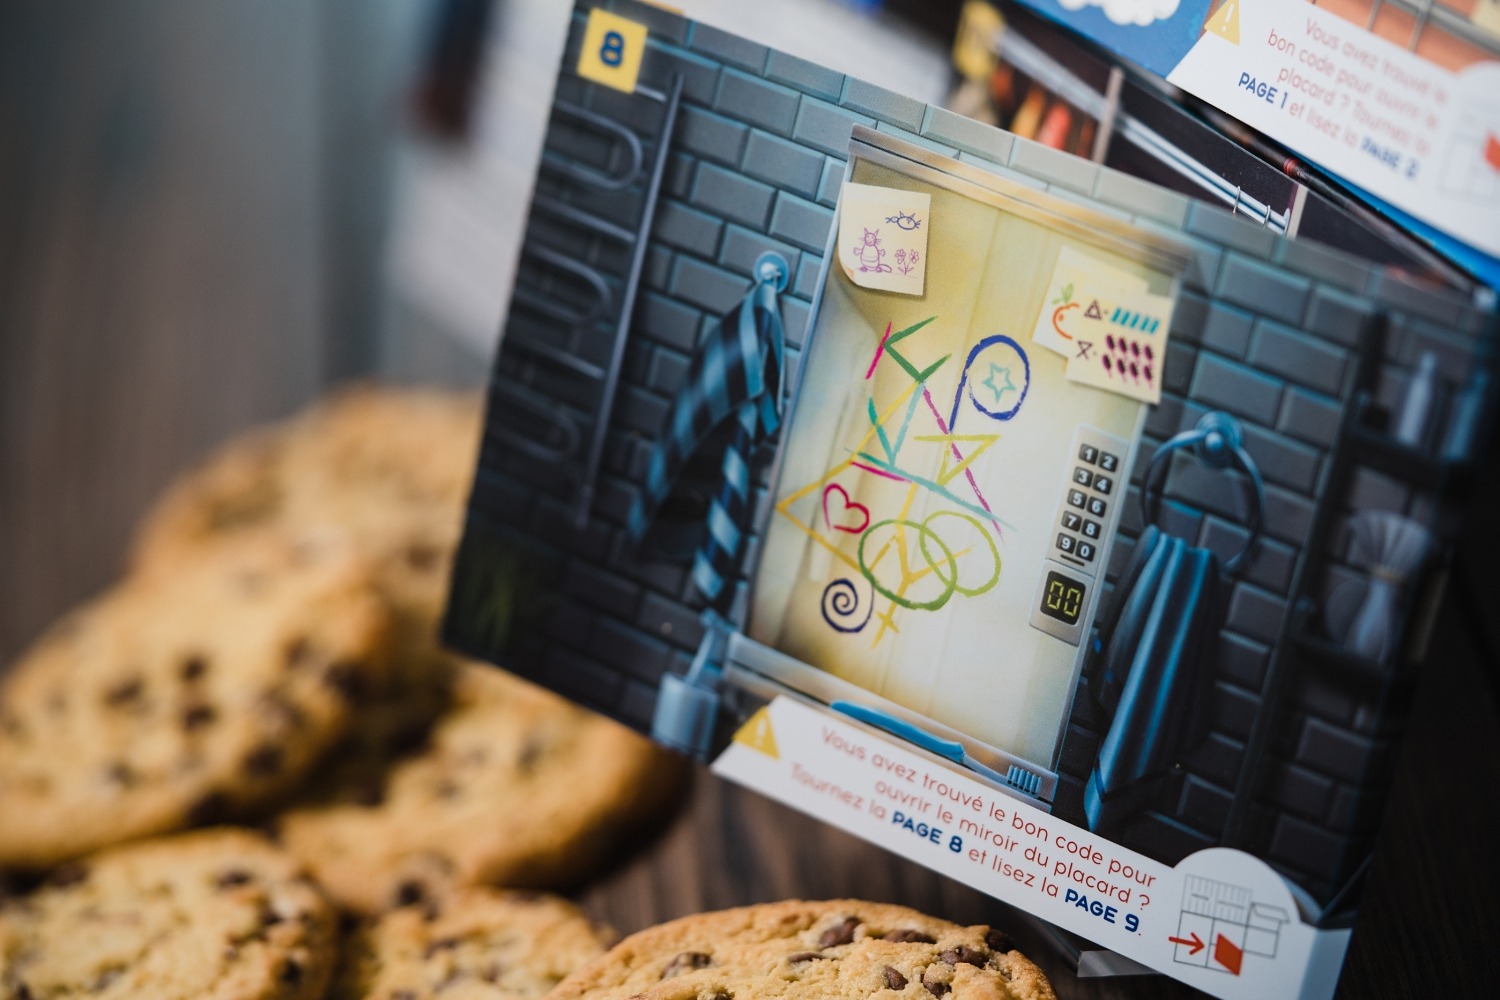 Lifestyle Boardgames Ltd Unfold Kids : Opération Cookies